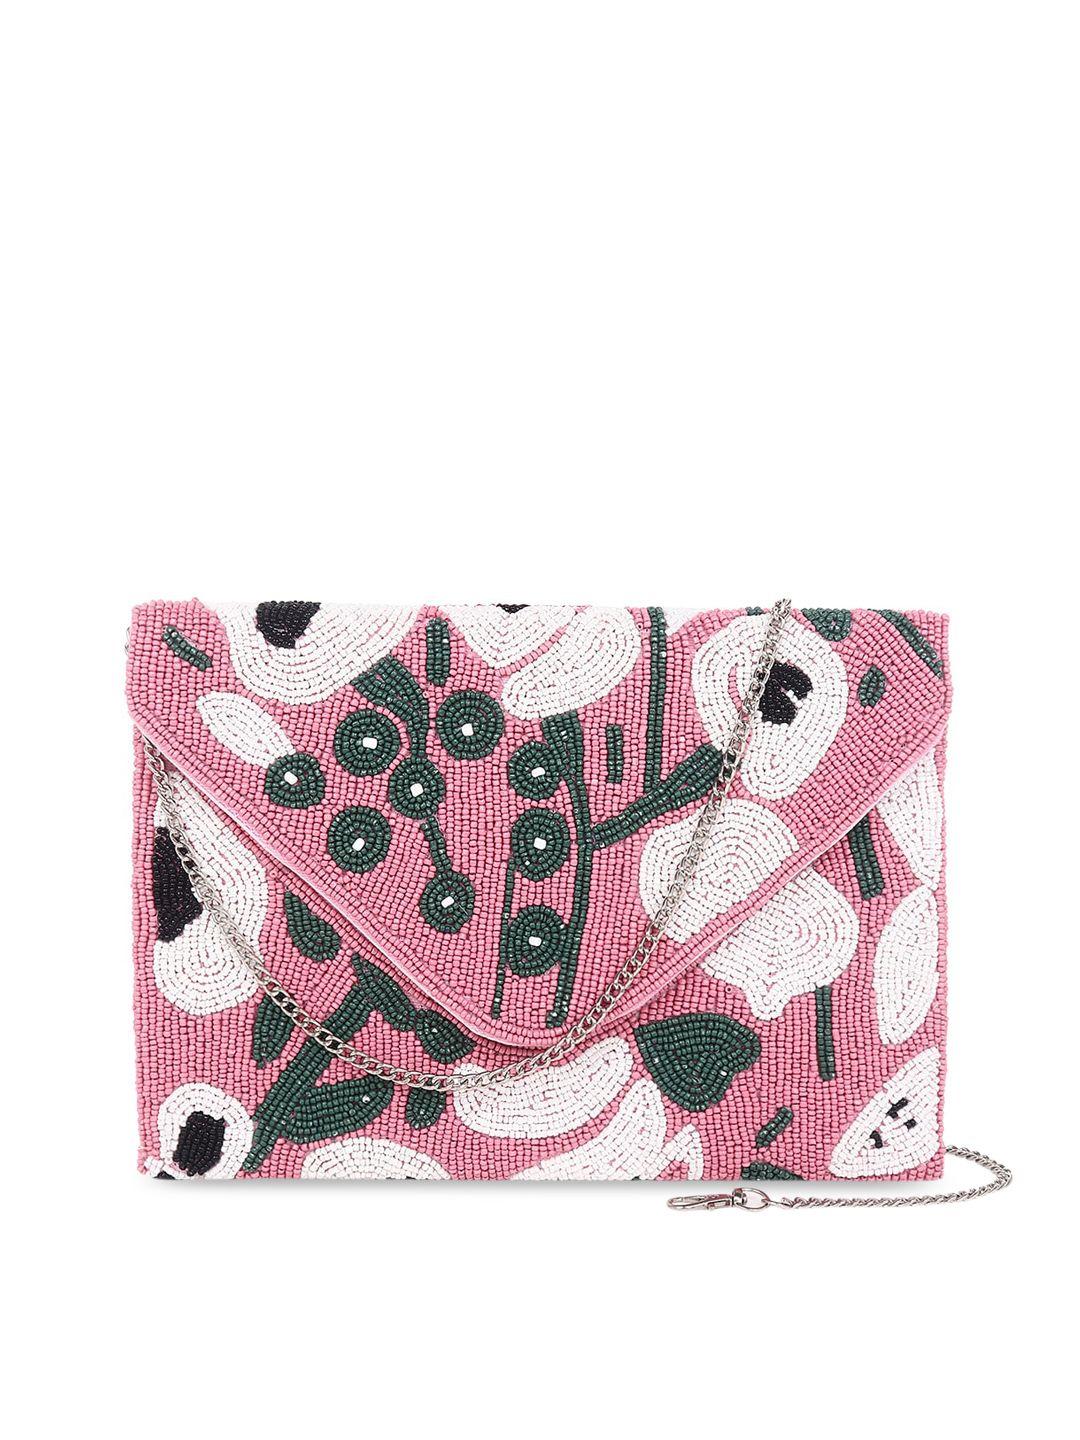 swisni pink & white embellished envelope clutch